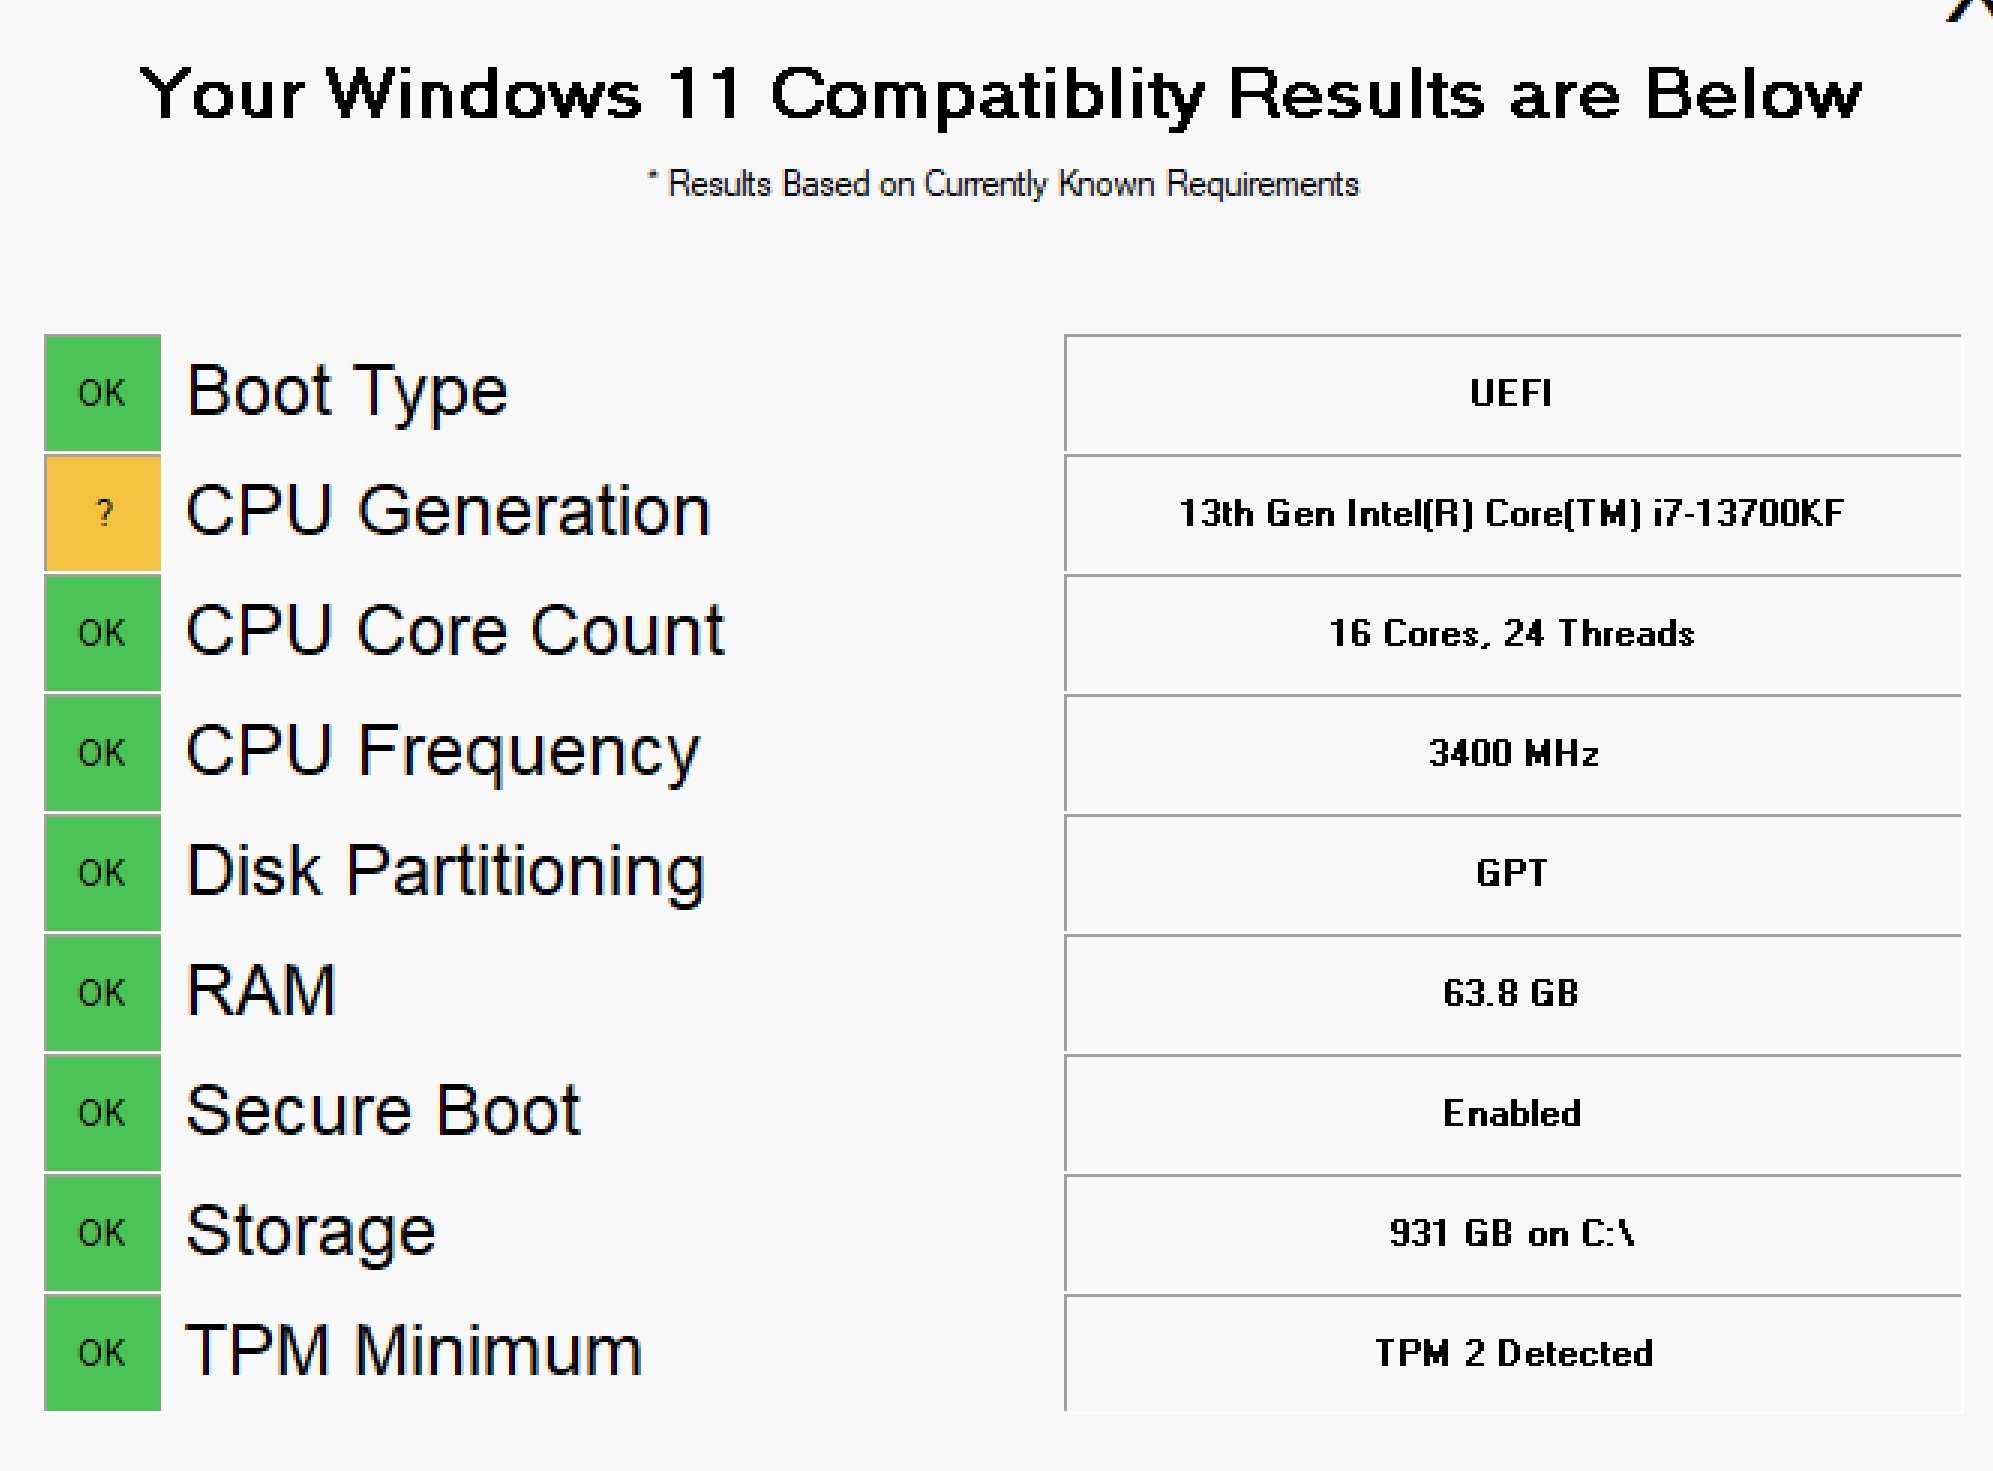 Intel n100 processor computers do not support hdcp 2.2 and av1 codecs. -  Microsoft Community Hub